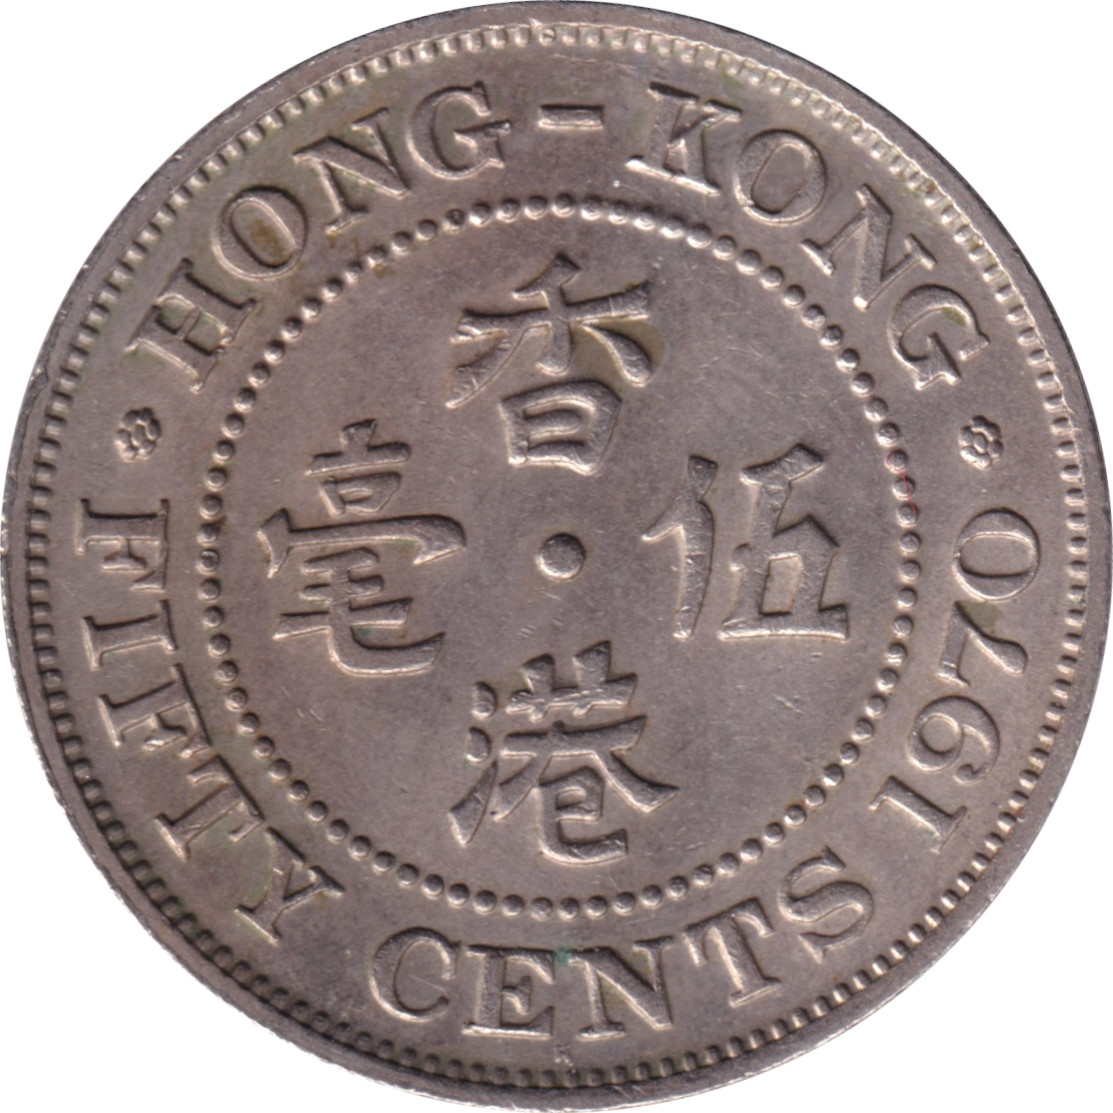 50 cents - Elizabeth II - Buste colonial